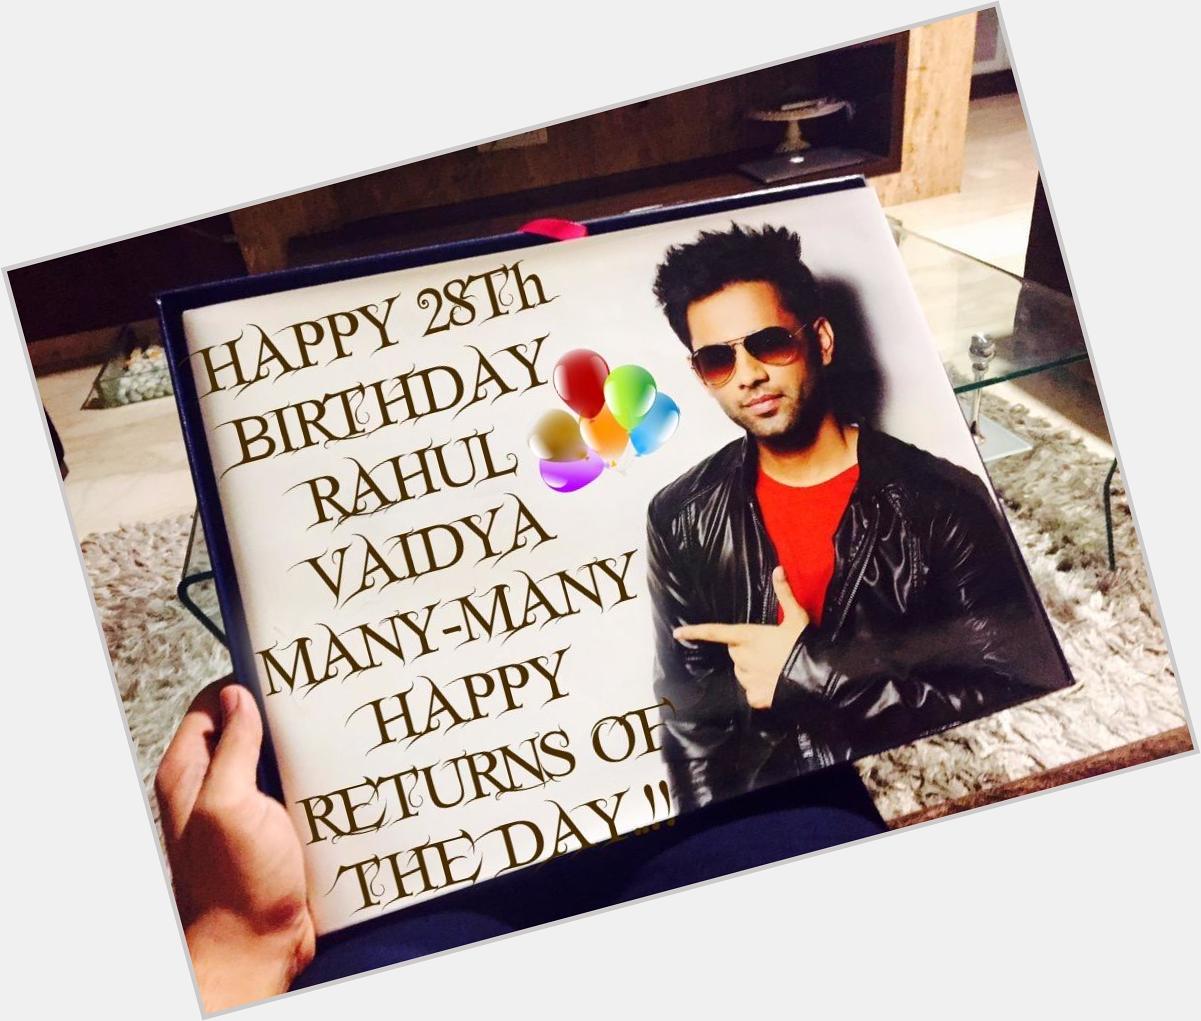  Happy birthday  Rahul vaidya 